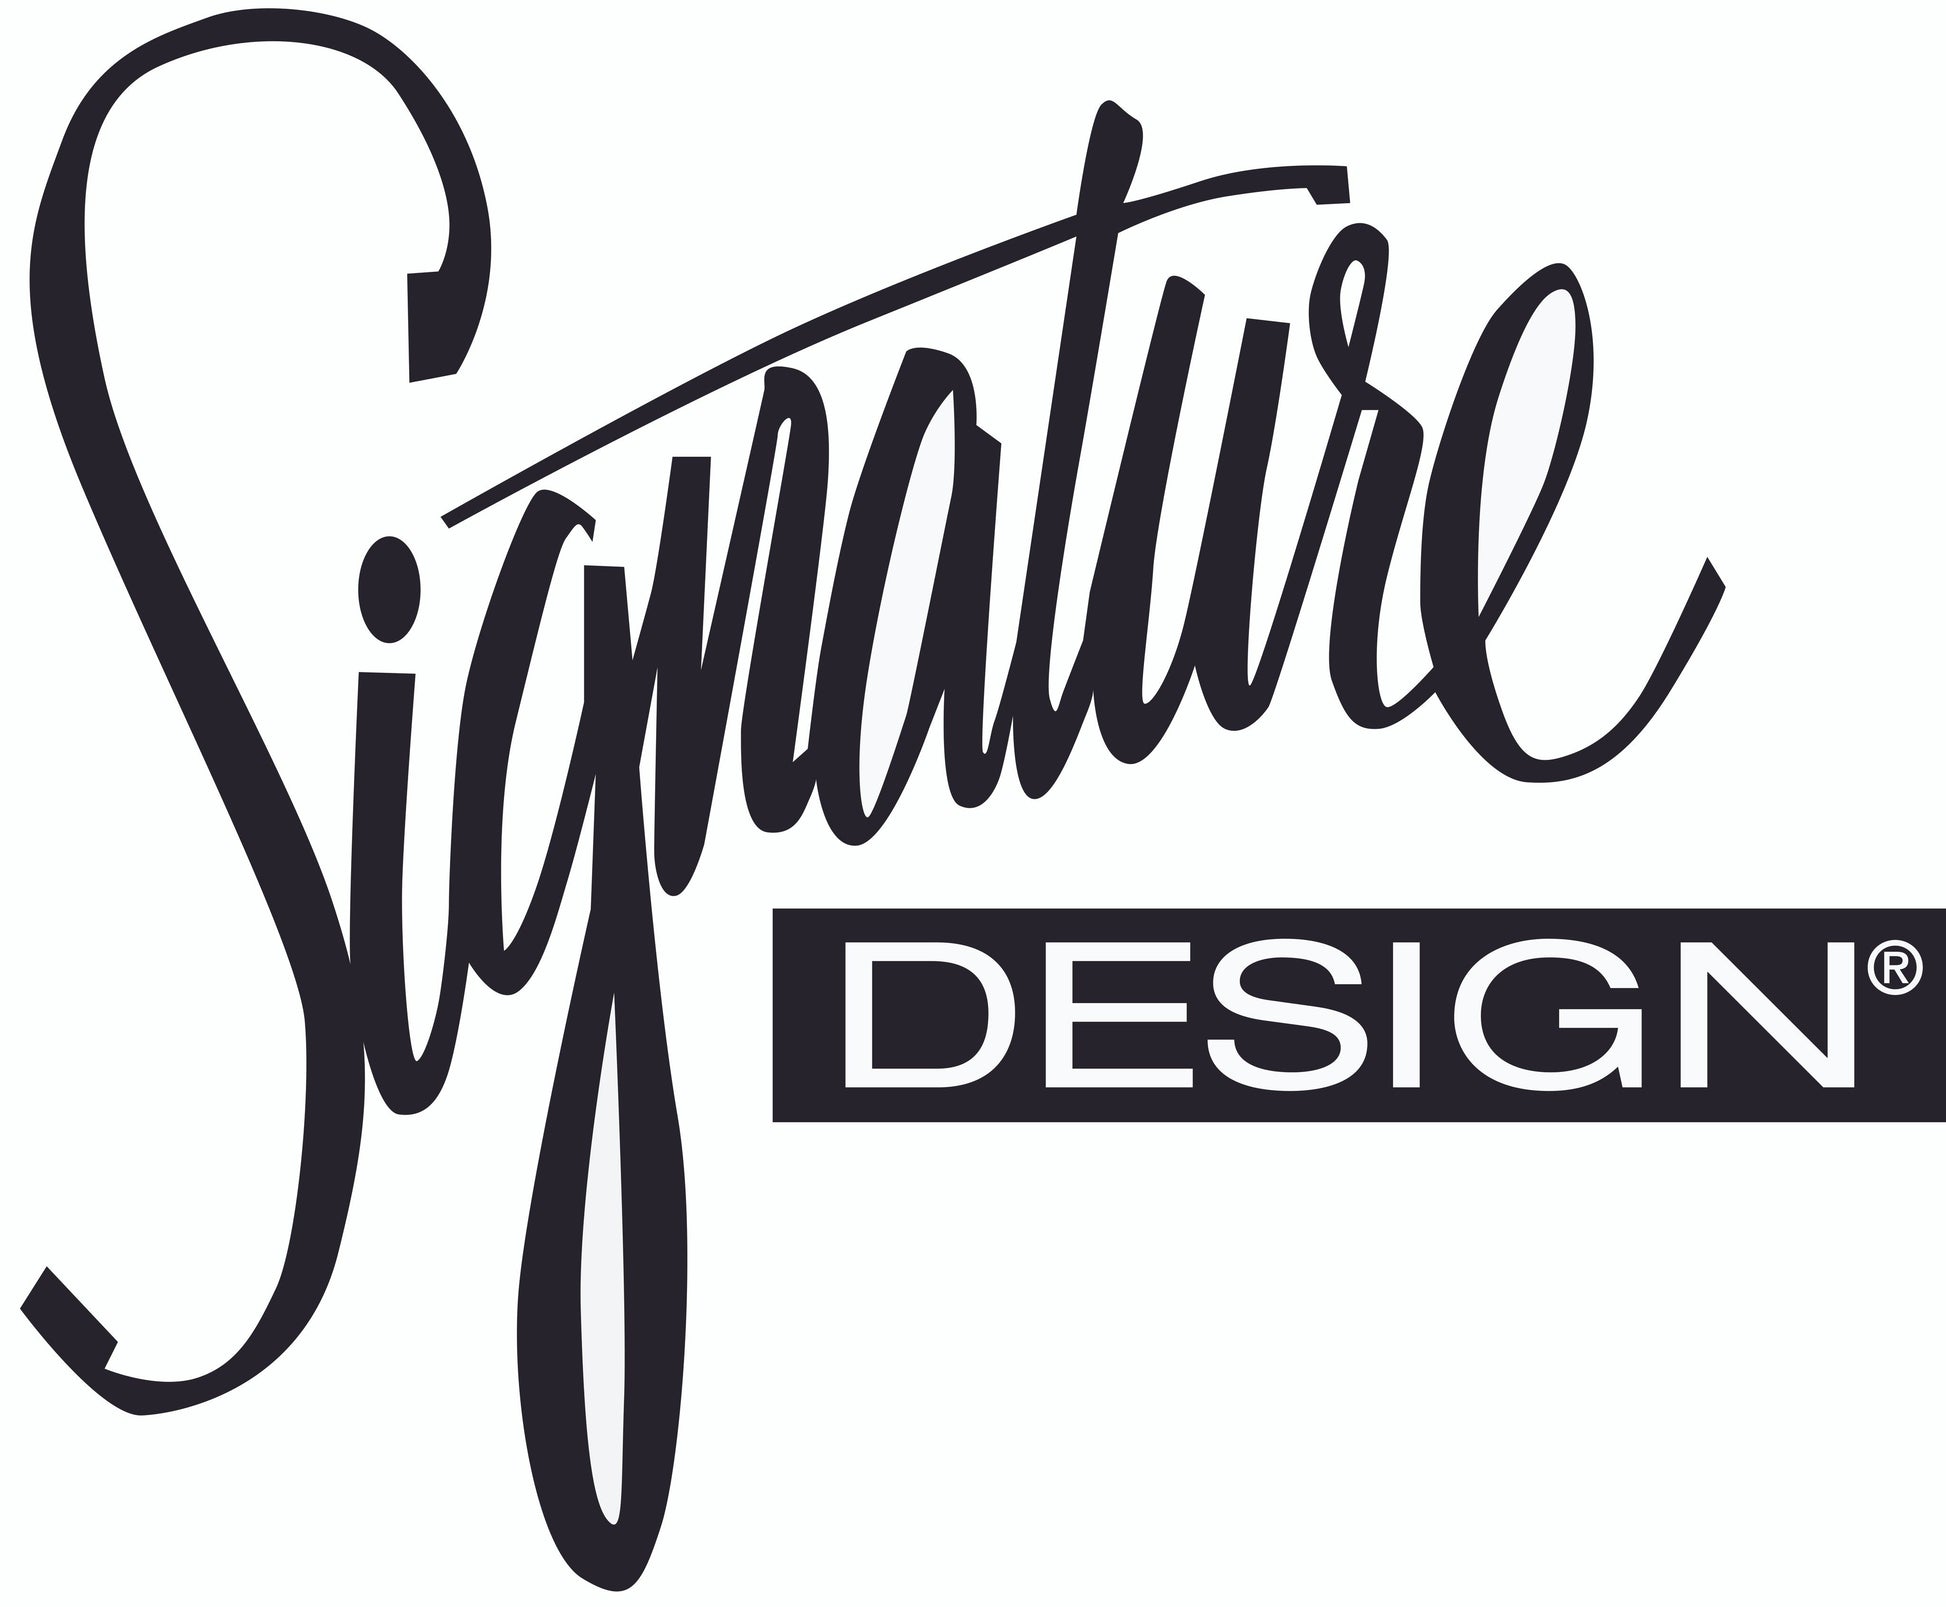 Dreward Paper Table Lamp (1/CN) Signature Design by Ashley®